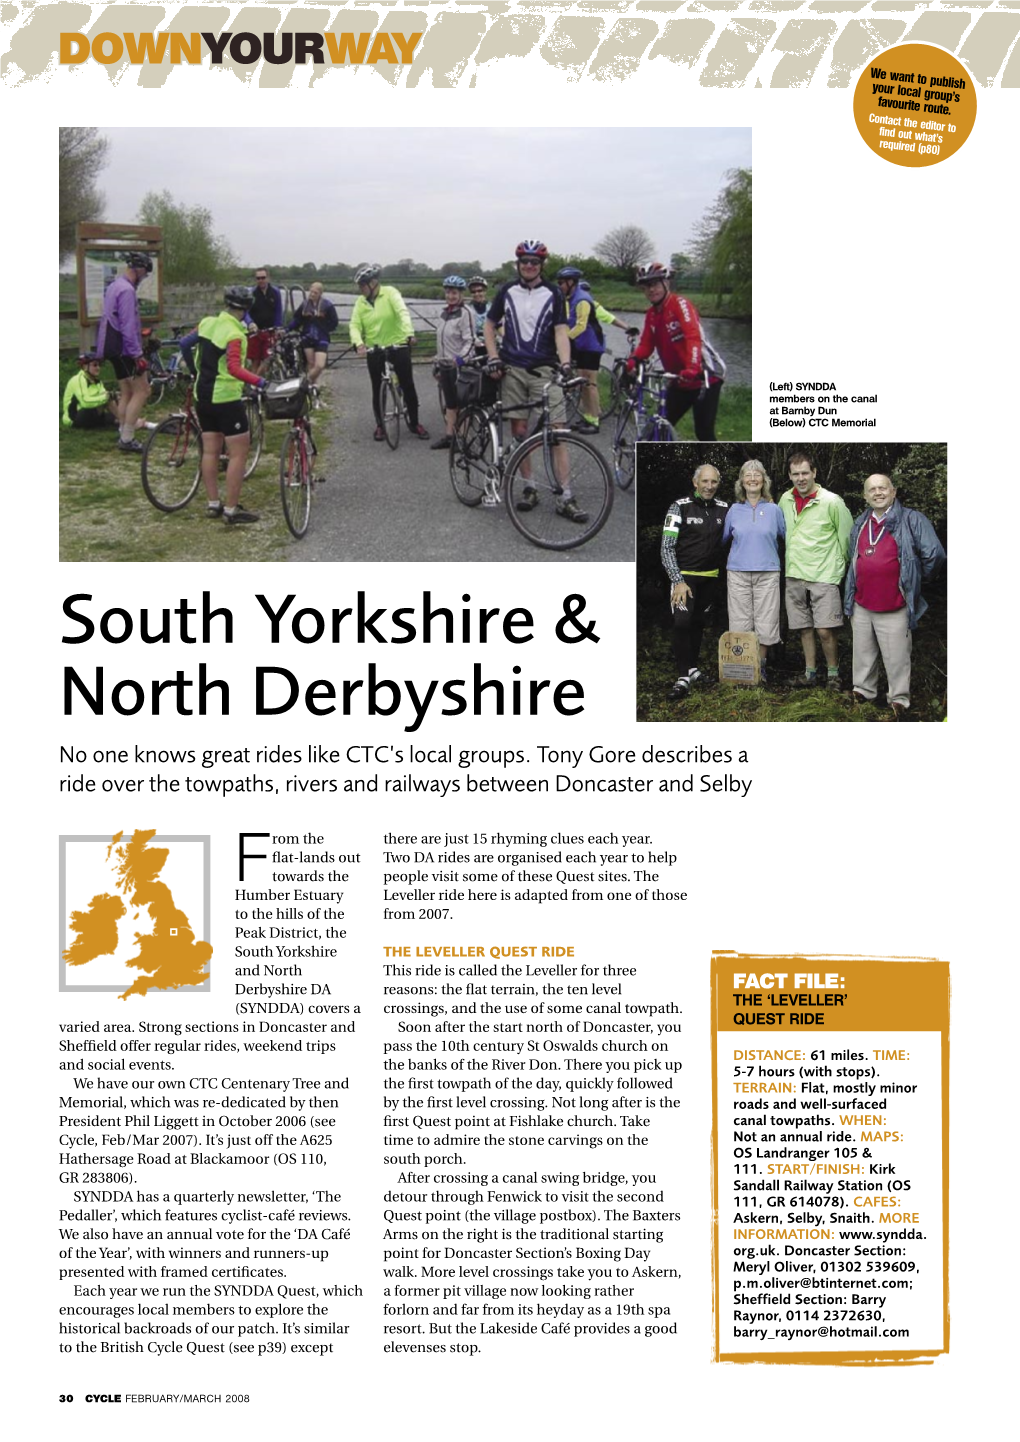 South Yorkshire & North Derbyshire